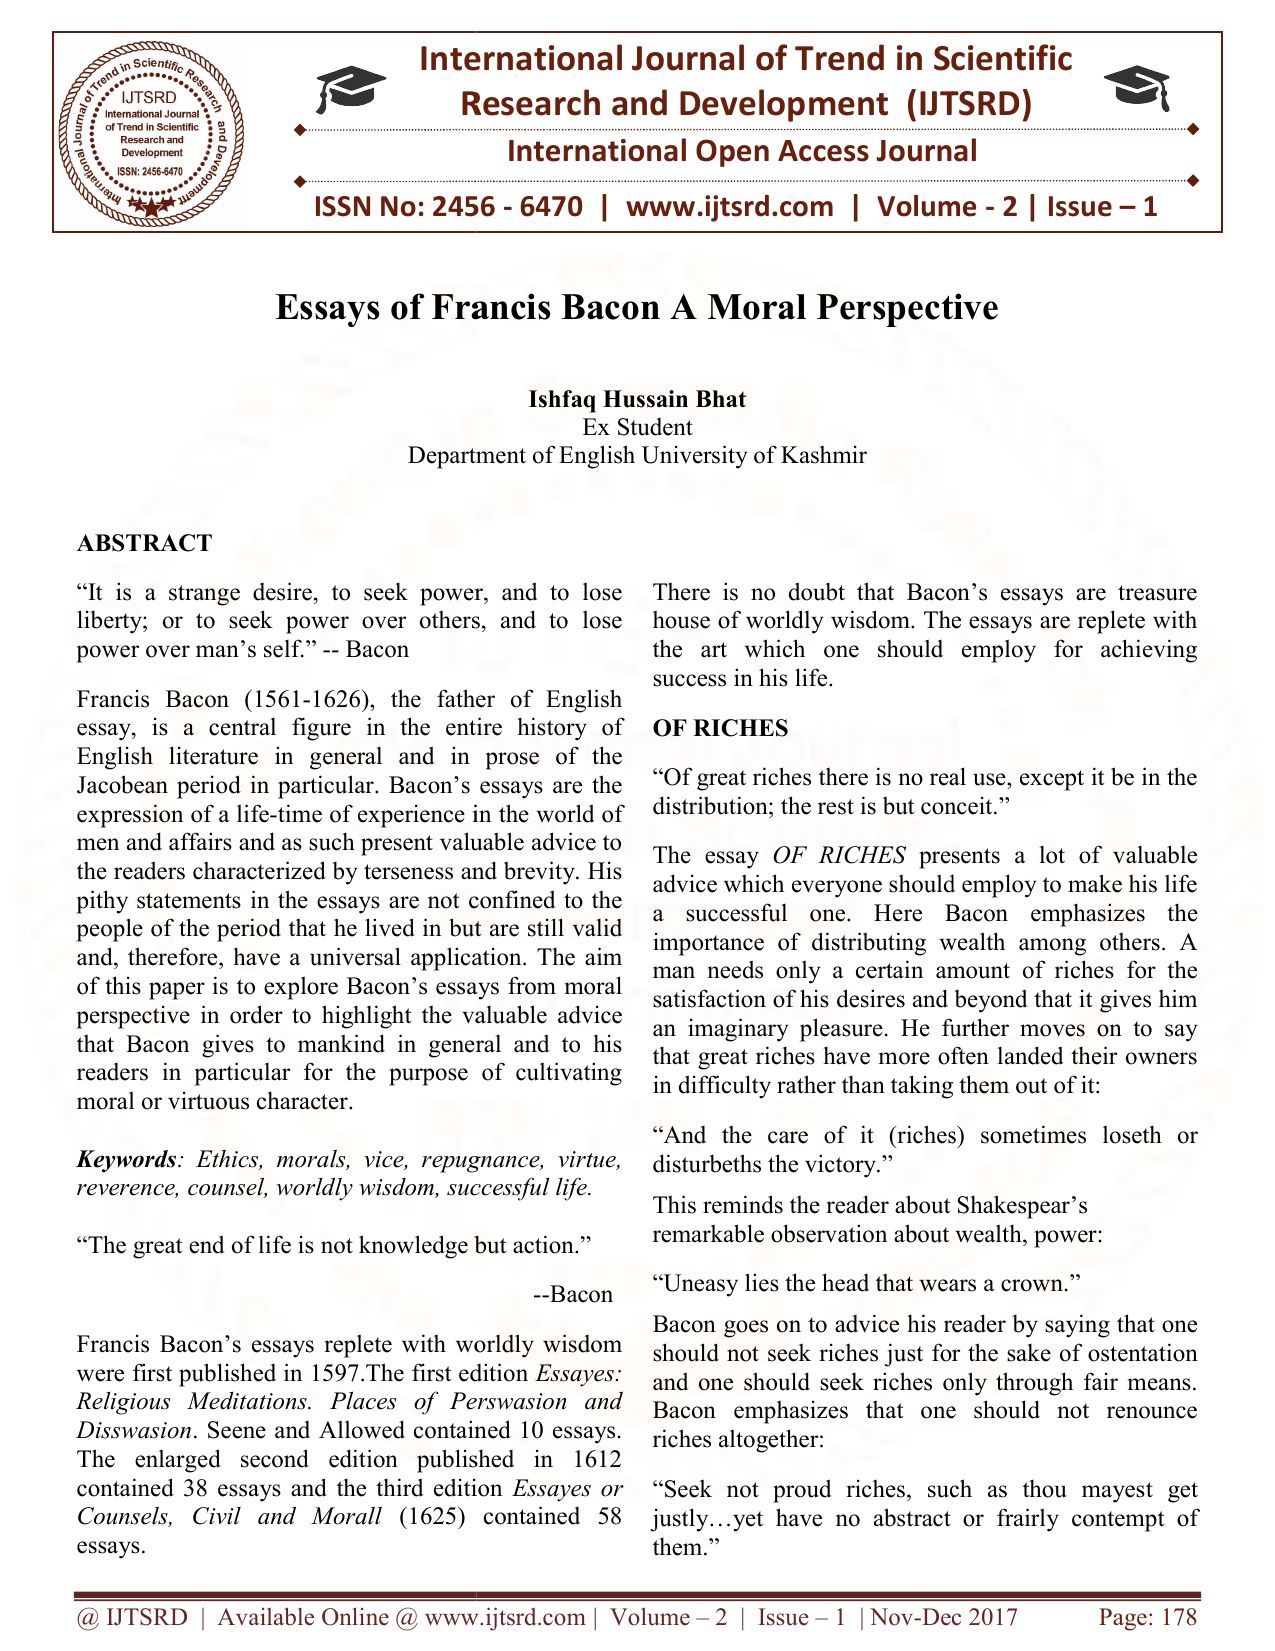 francis bacon essays of friendship